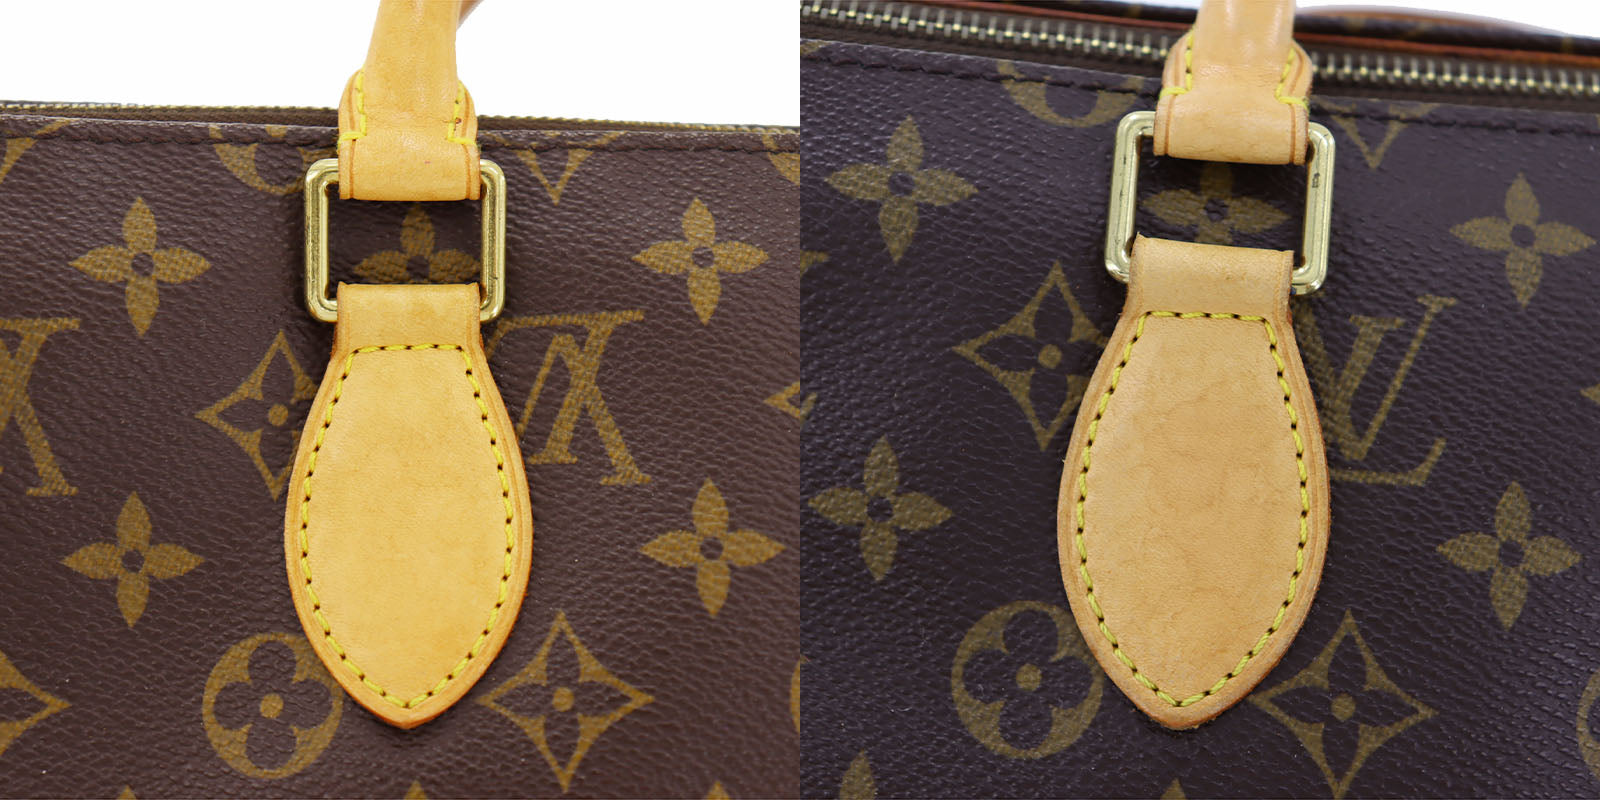 Louis Vuitton Monogram Popincourt MM - Brown Totes, Handbags